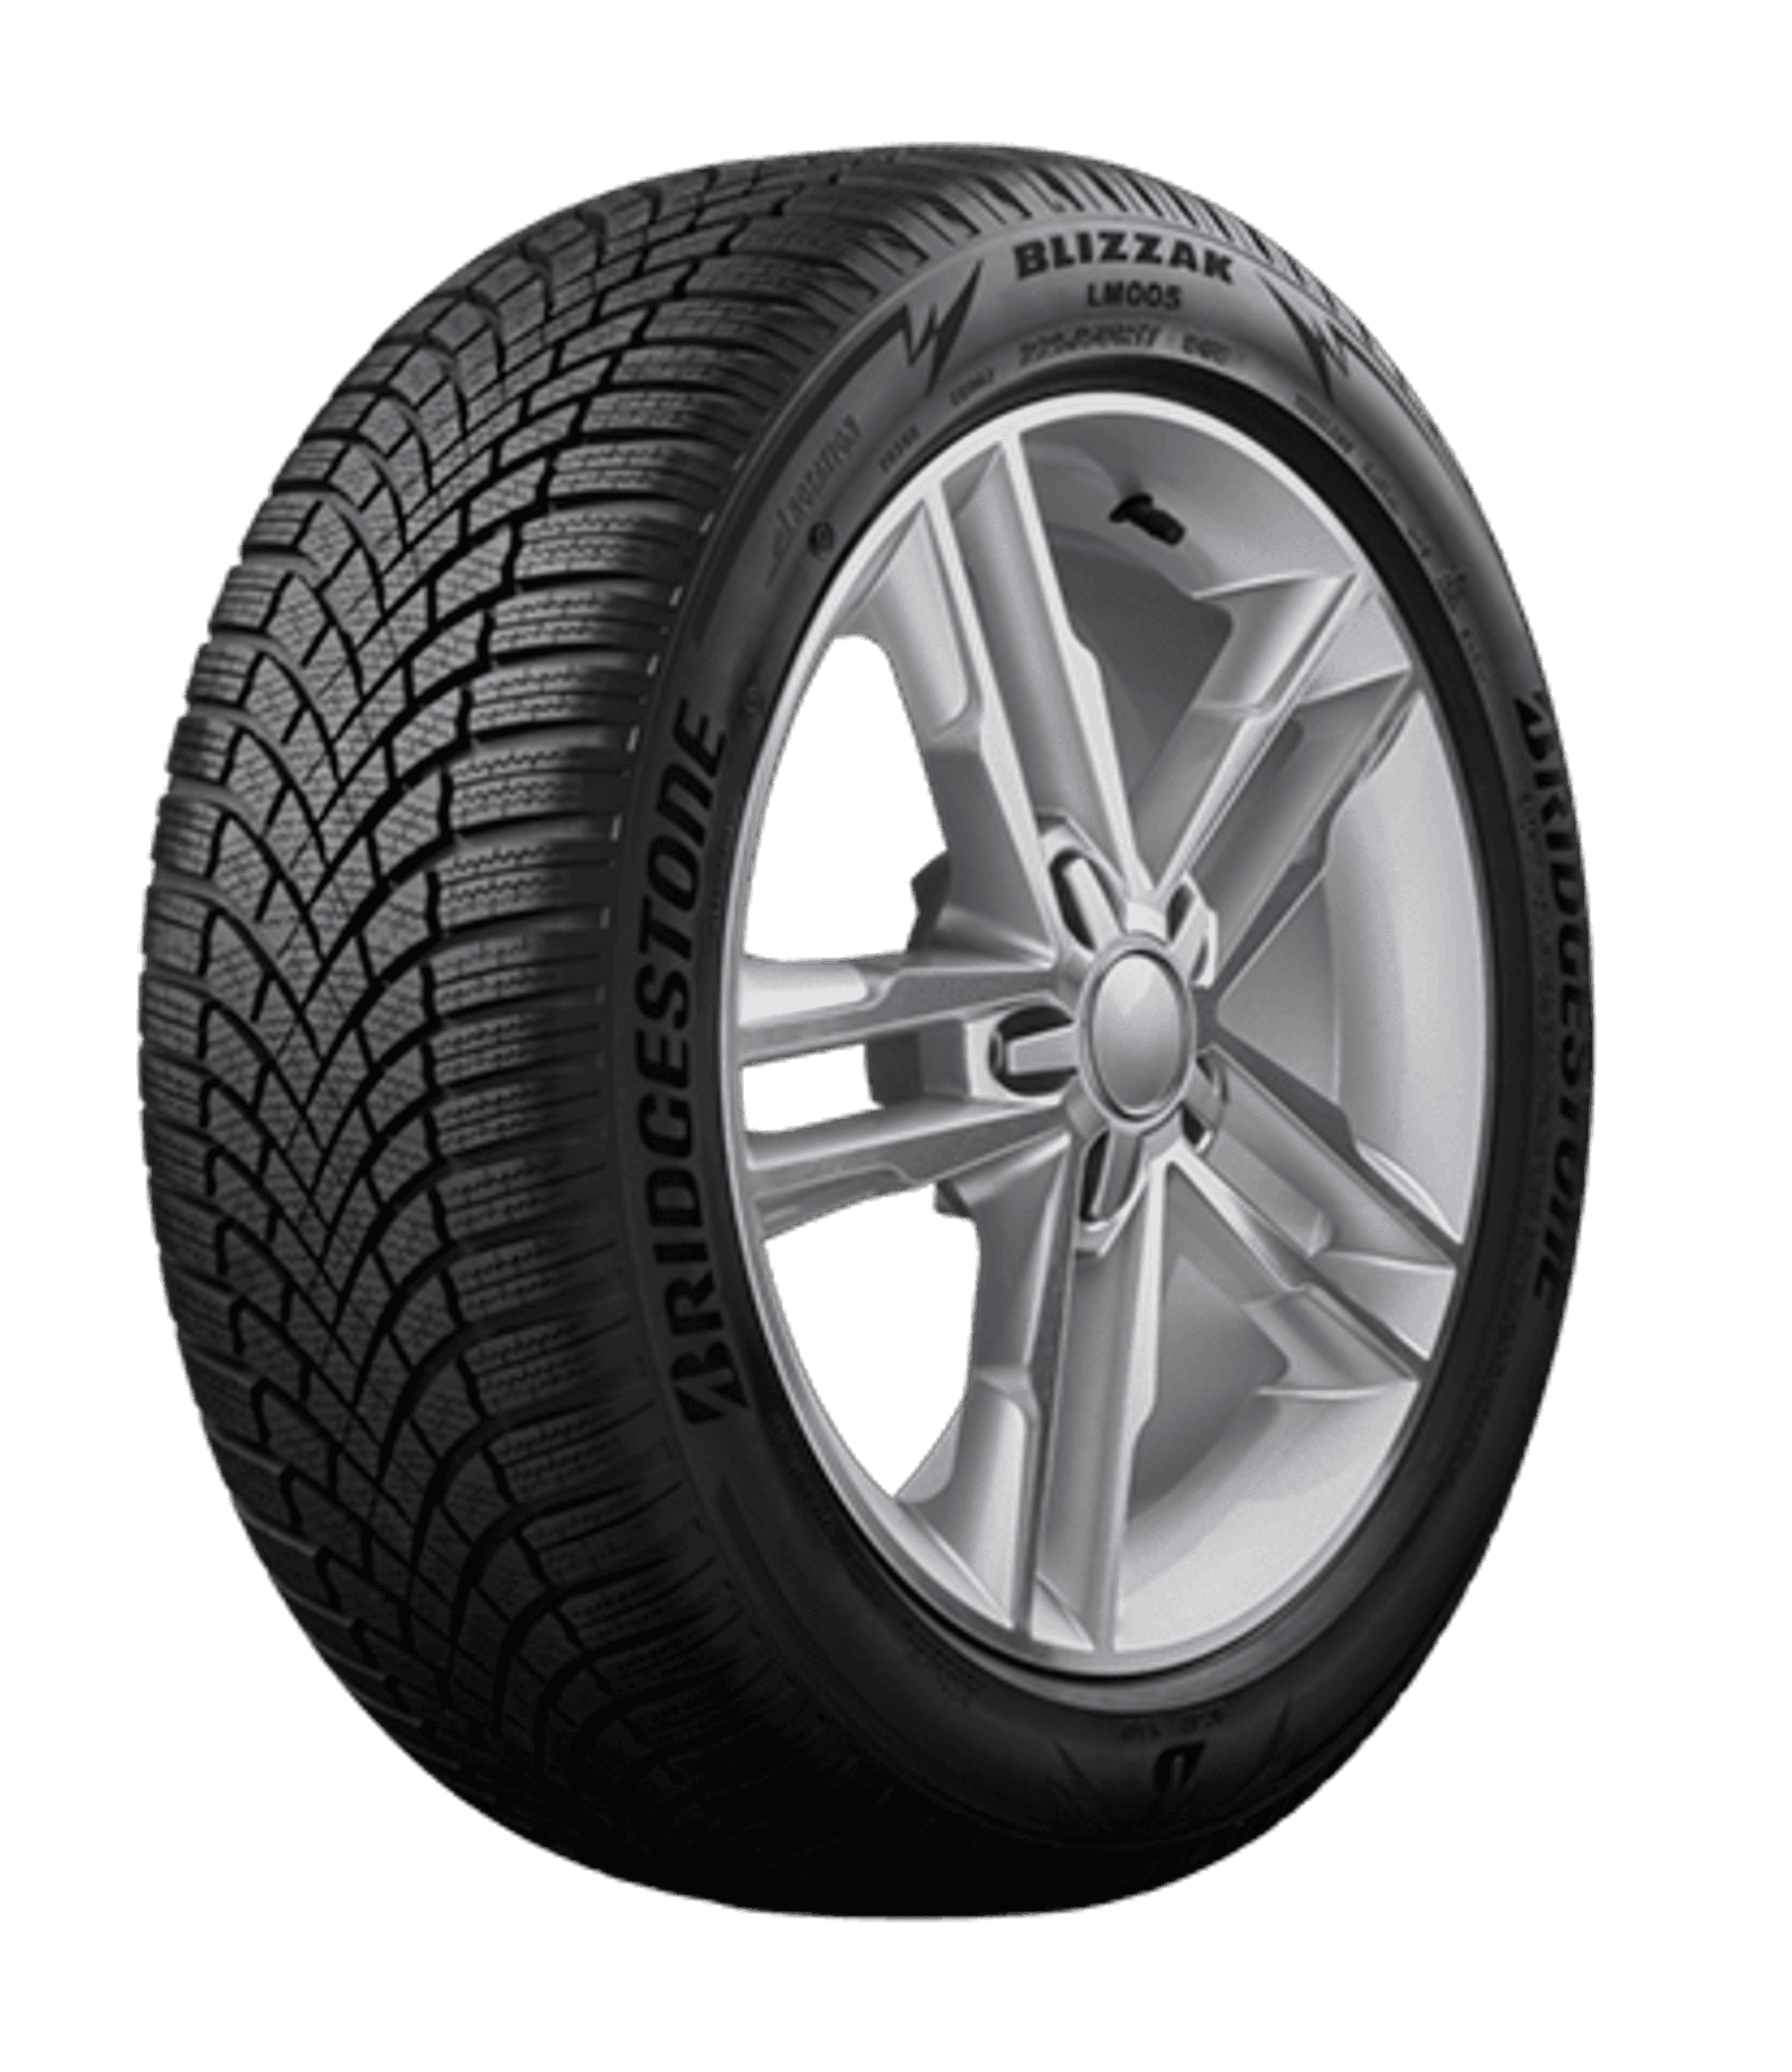 Buy Bridgestone Blizzak Online SimpleTire | LM005 Tires